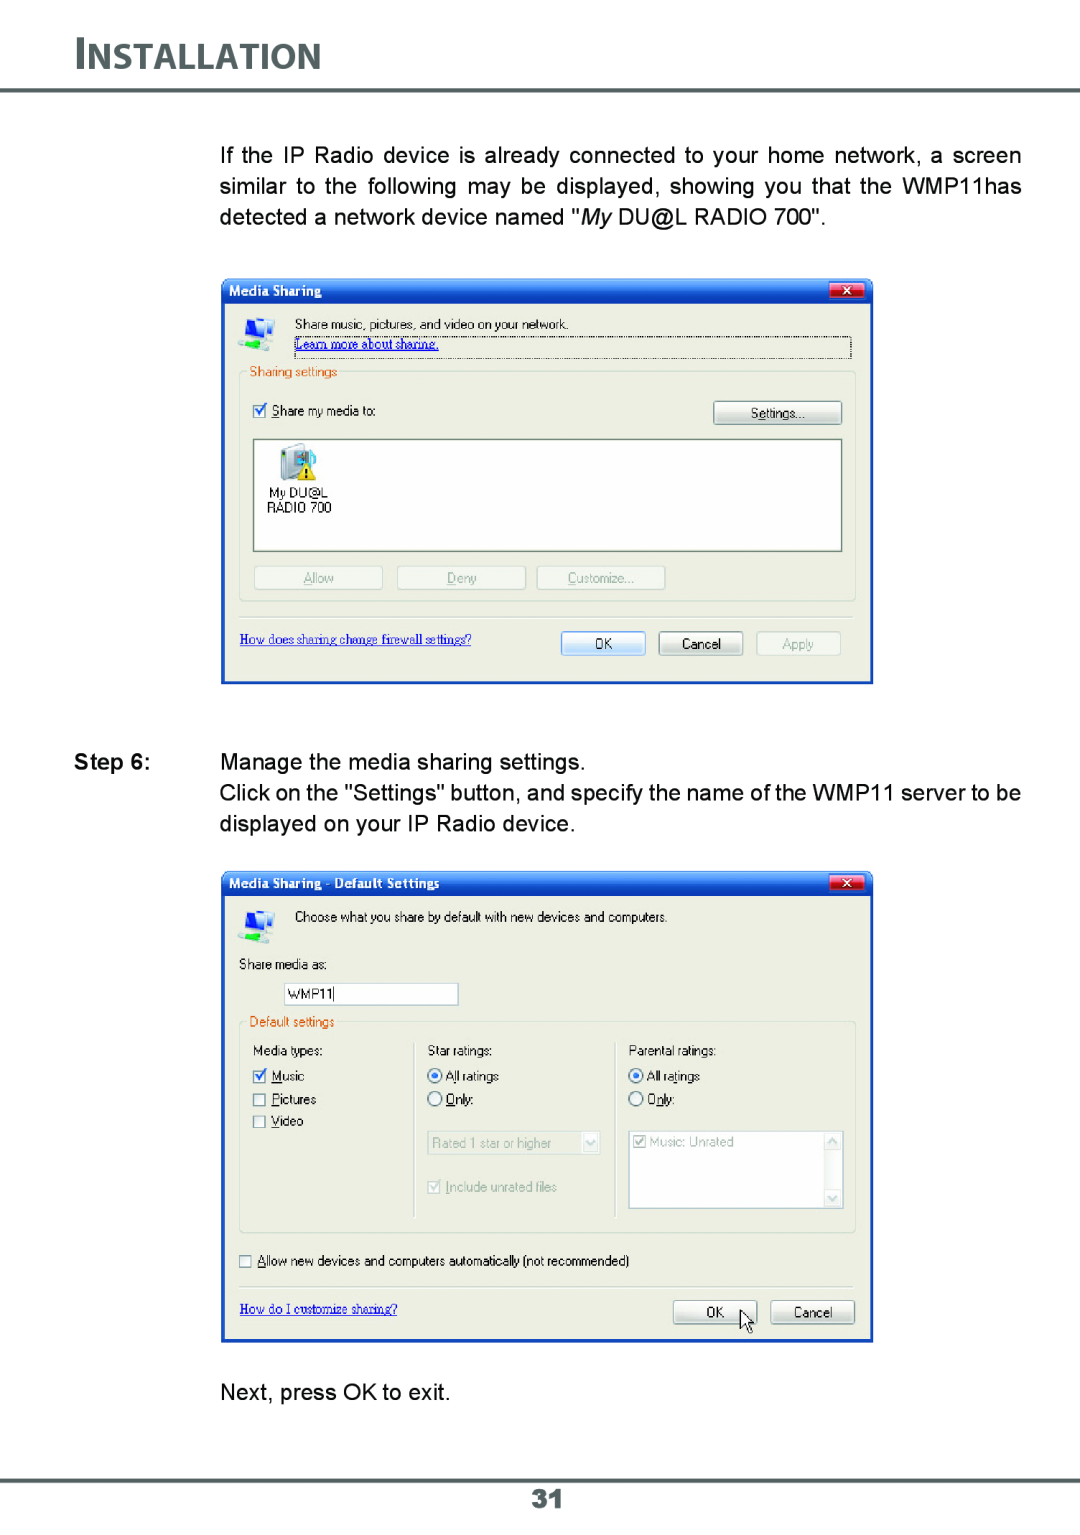 Sagem 700 manual Installation, Manage the media sharing settings, Next, press OK to exit 